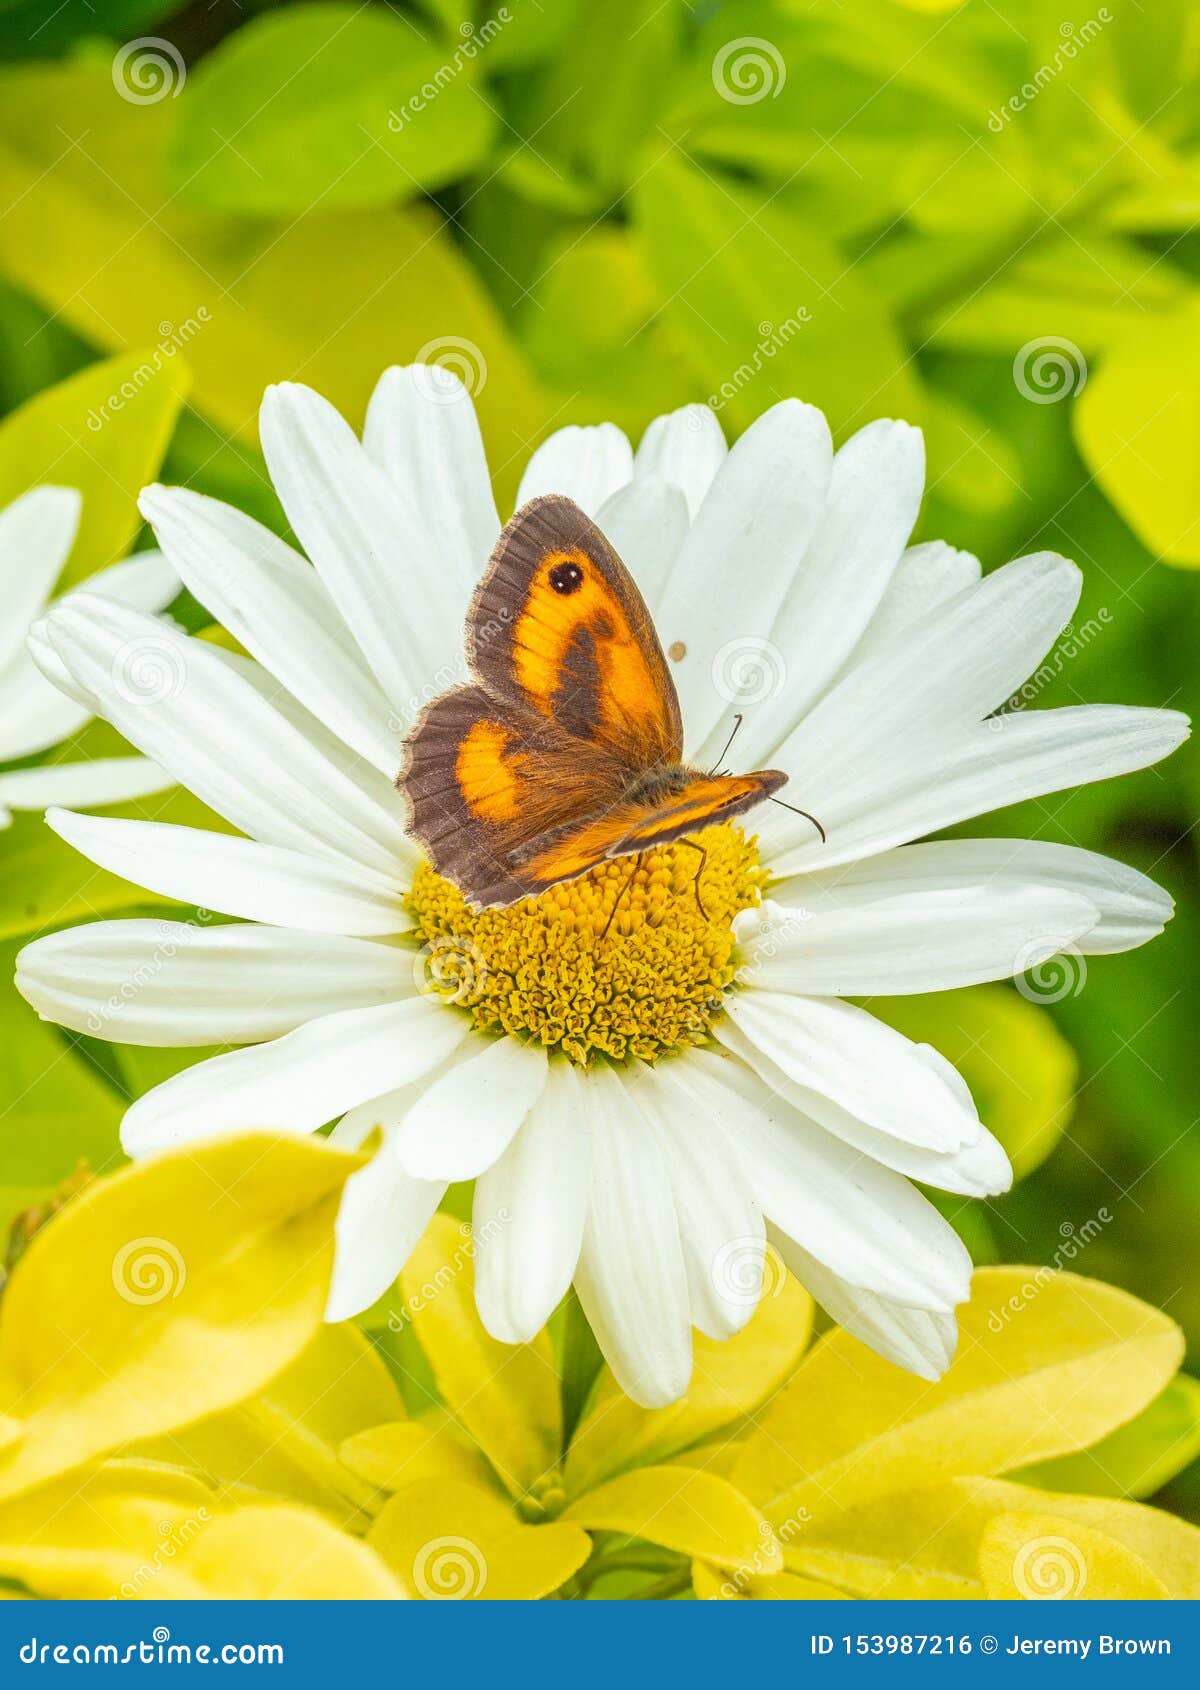 meadow brown butterfly, maniola jurtina. english country garden